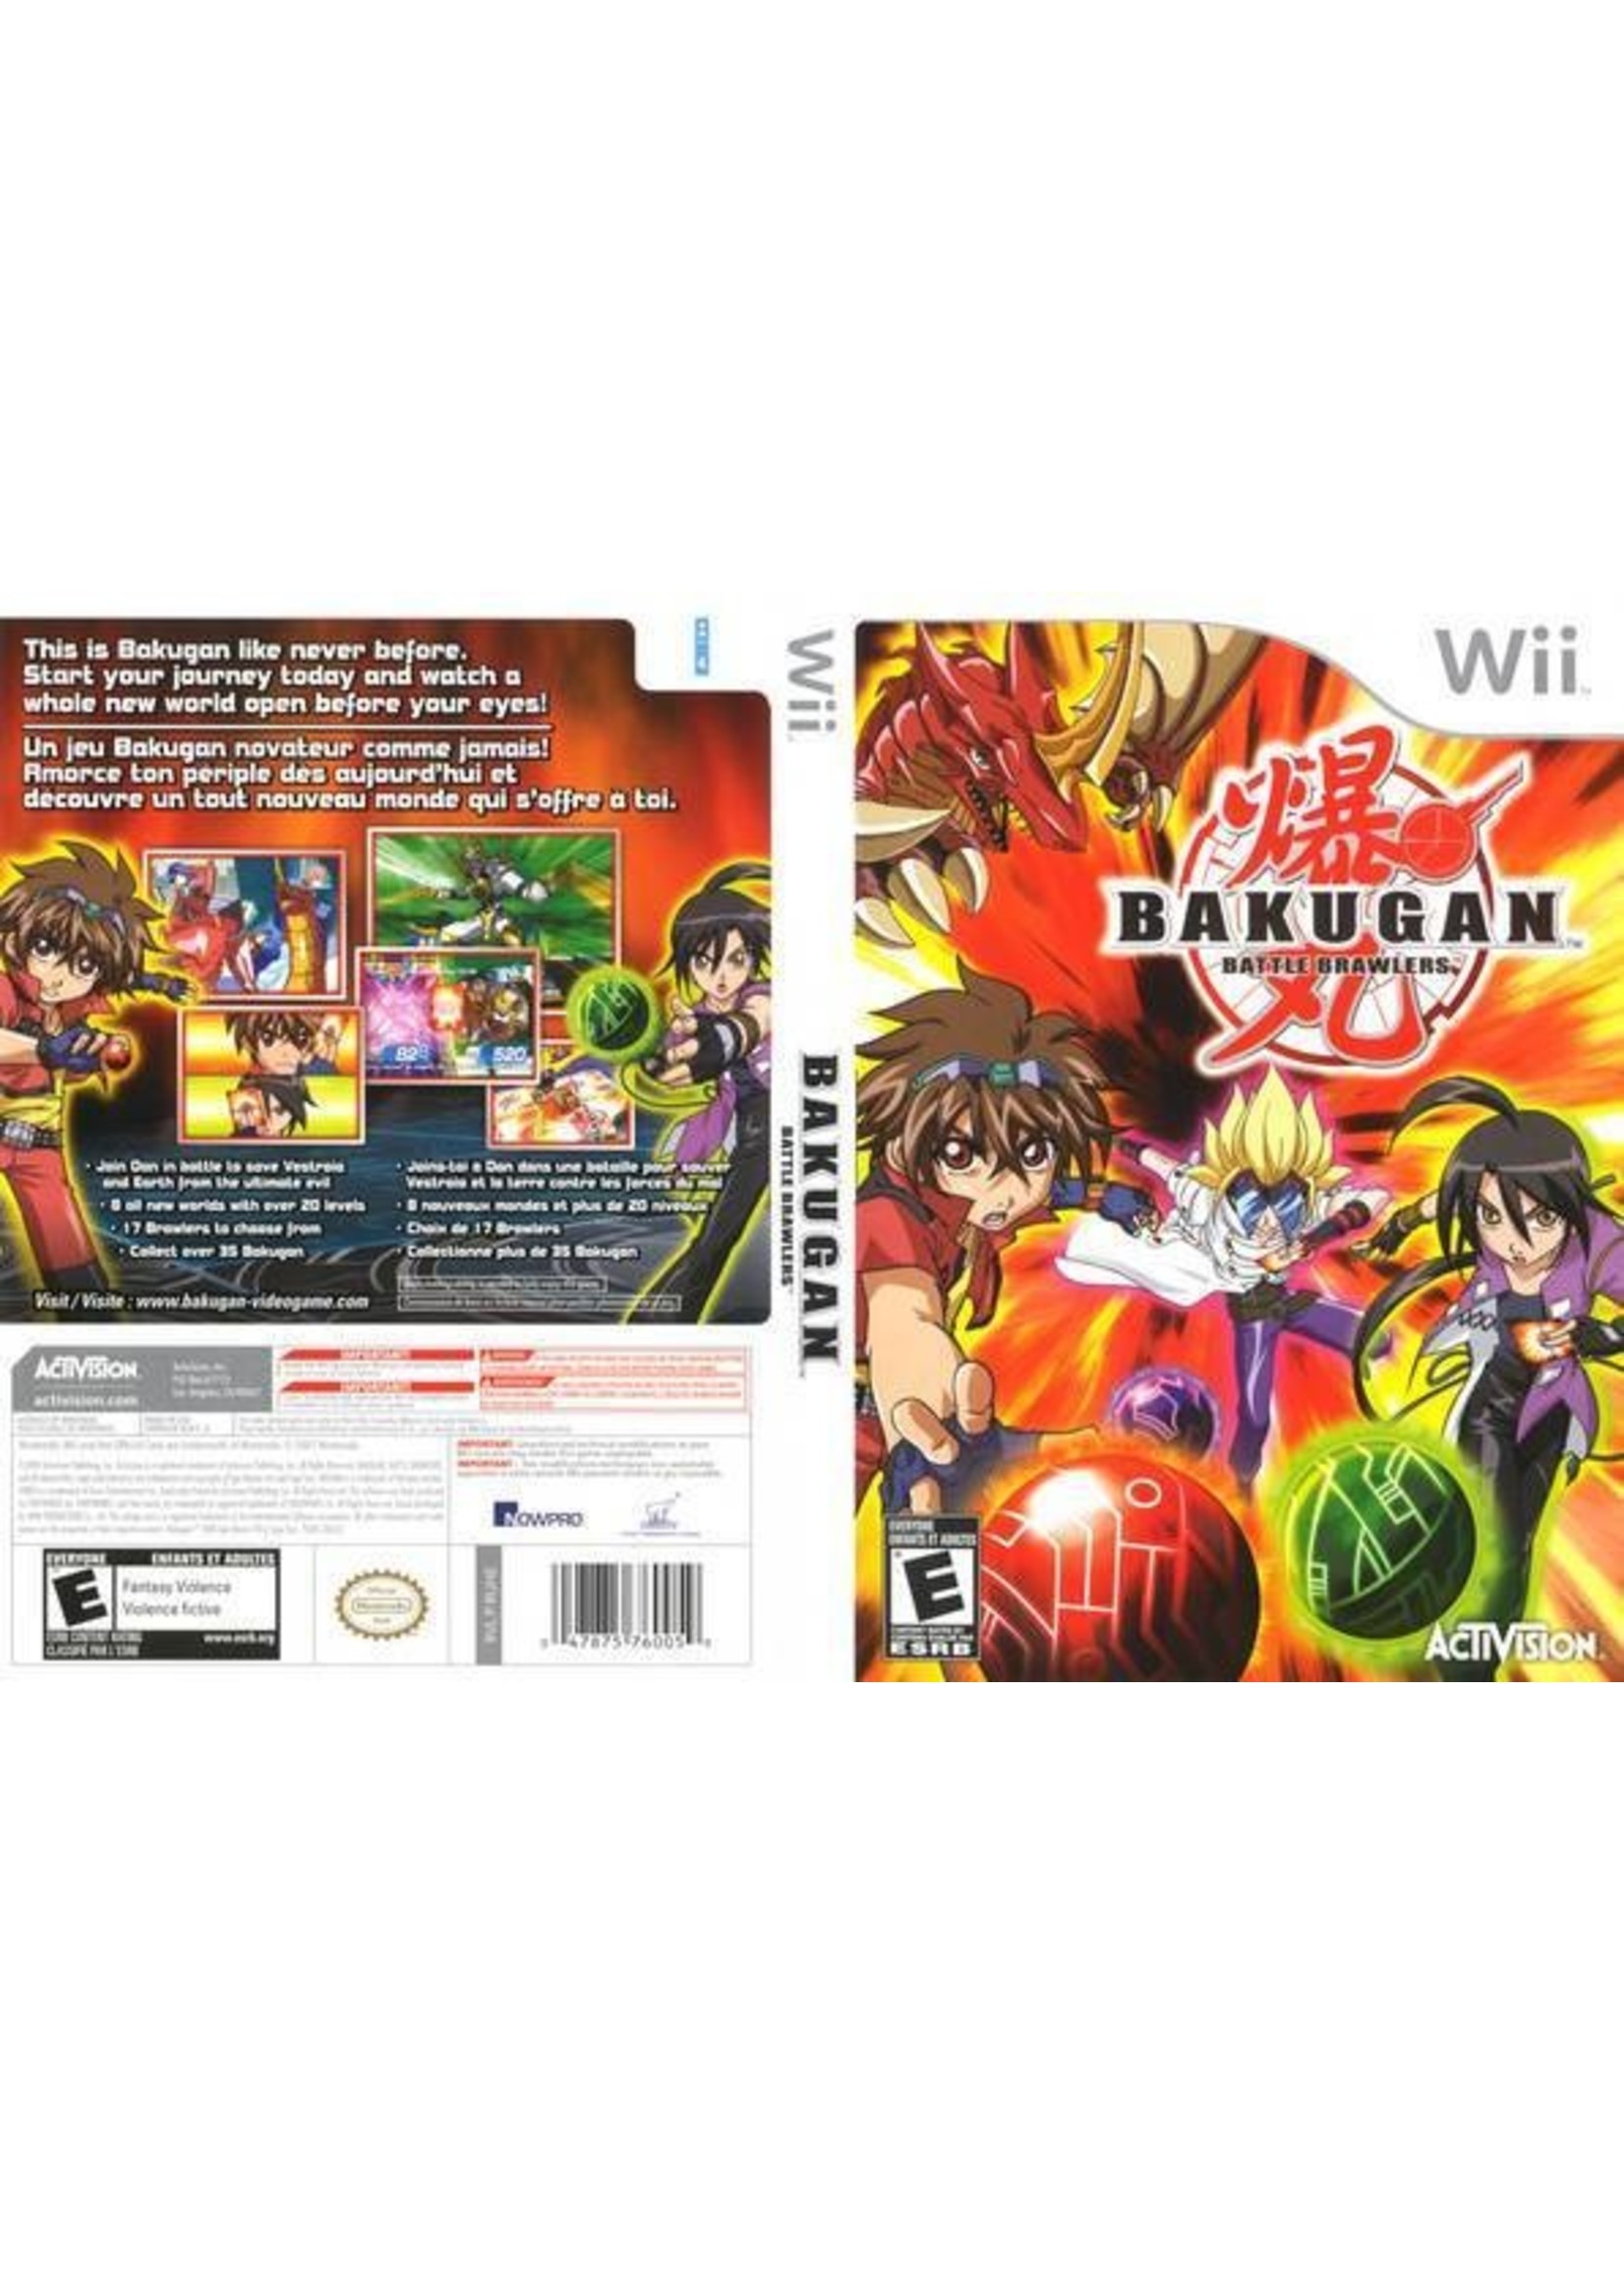 Nintendo Wii Bakugan Battle Brawlers